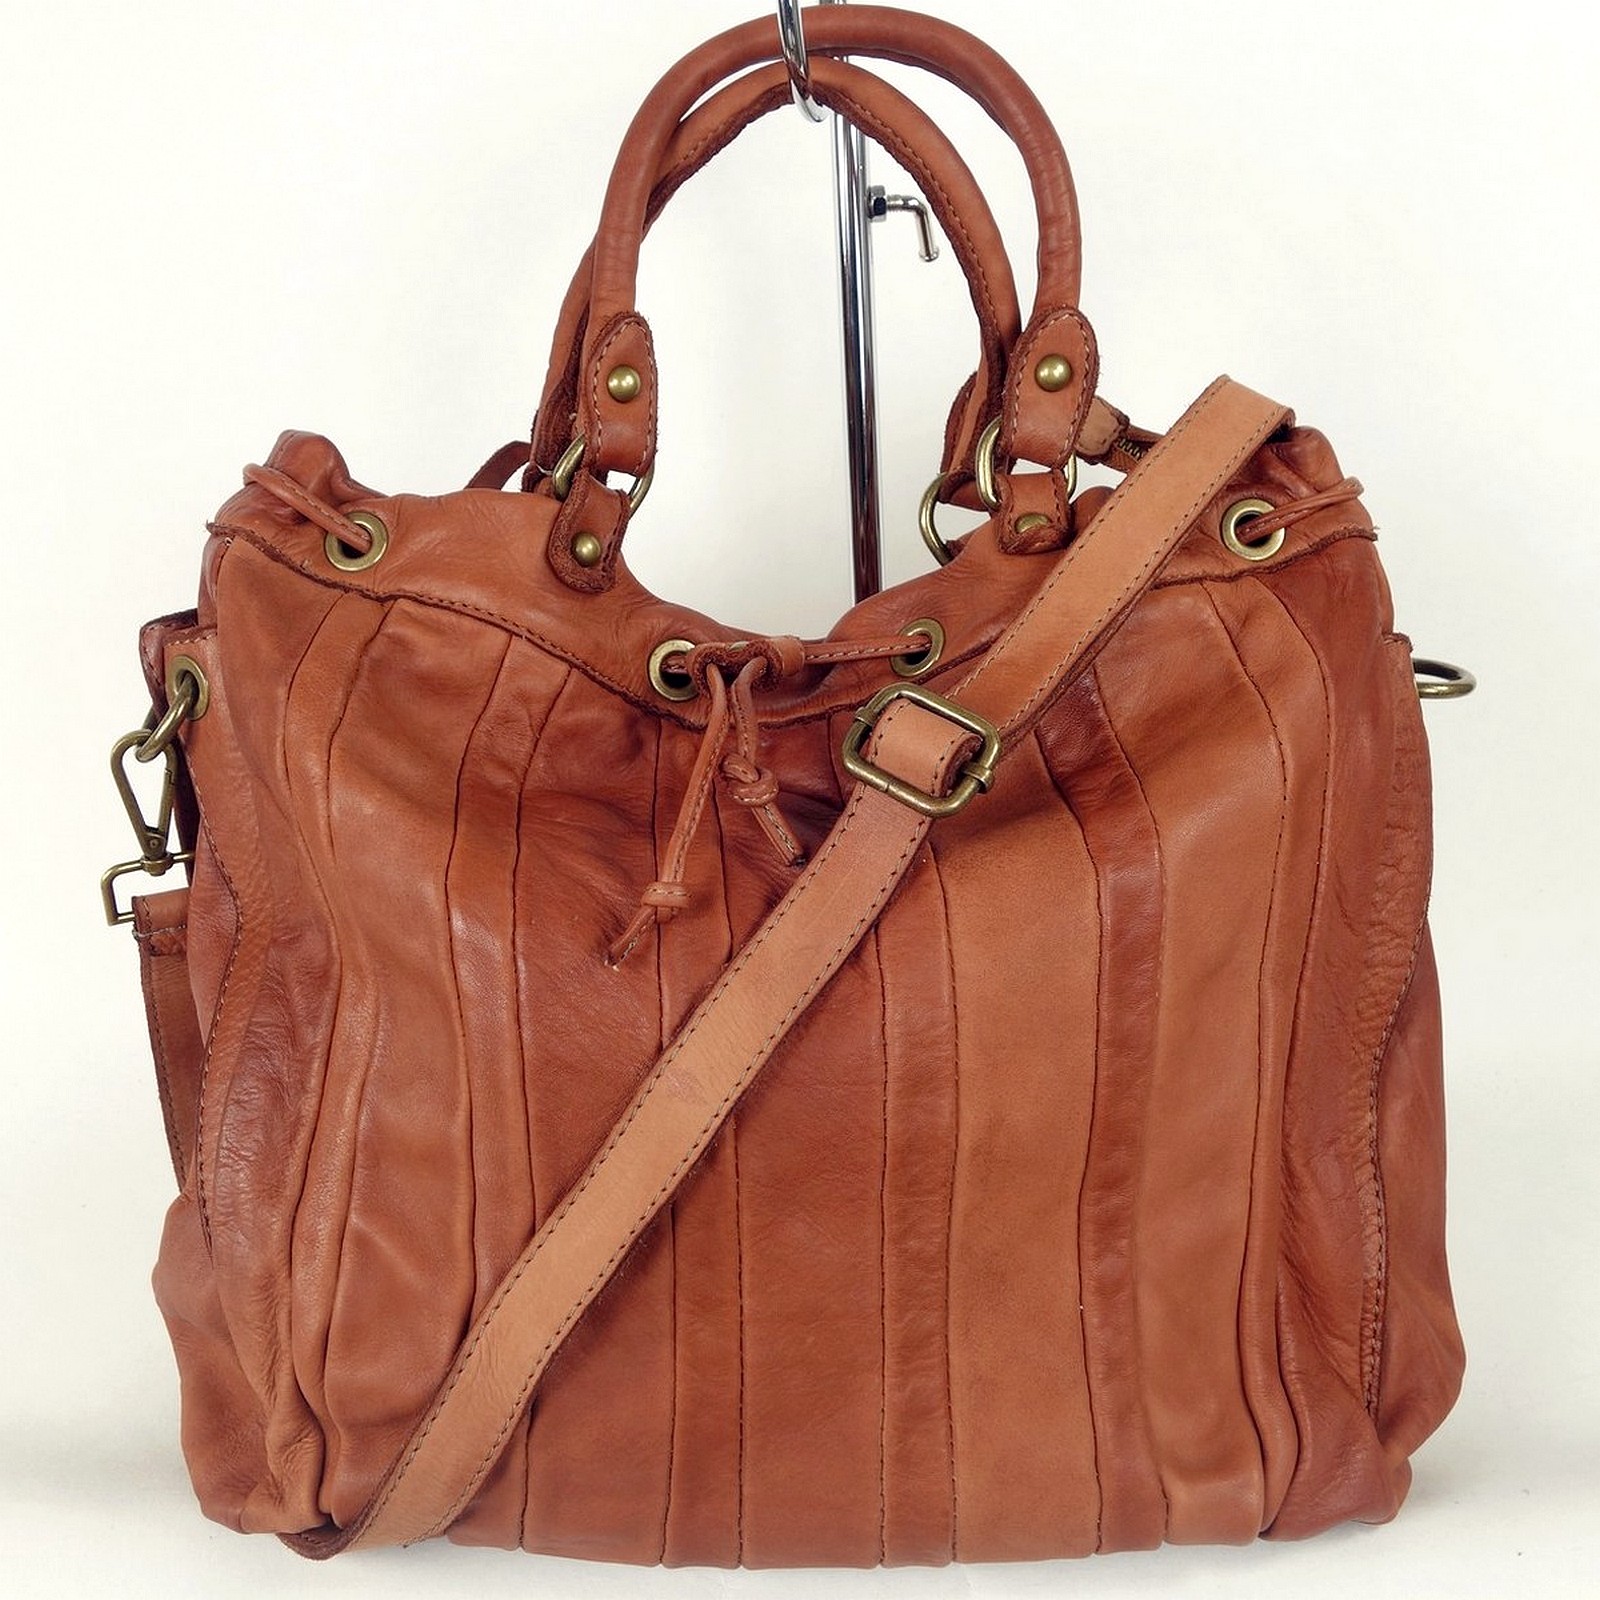 Grand sac à main cuir italien naturel Manue/Collection Esprit Cuir